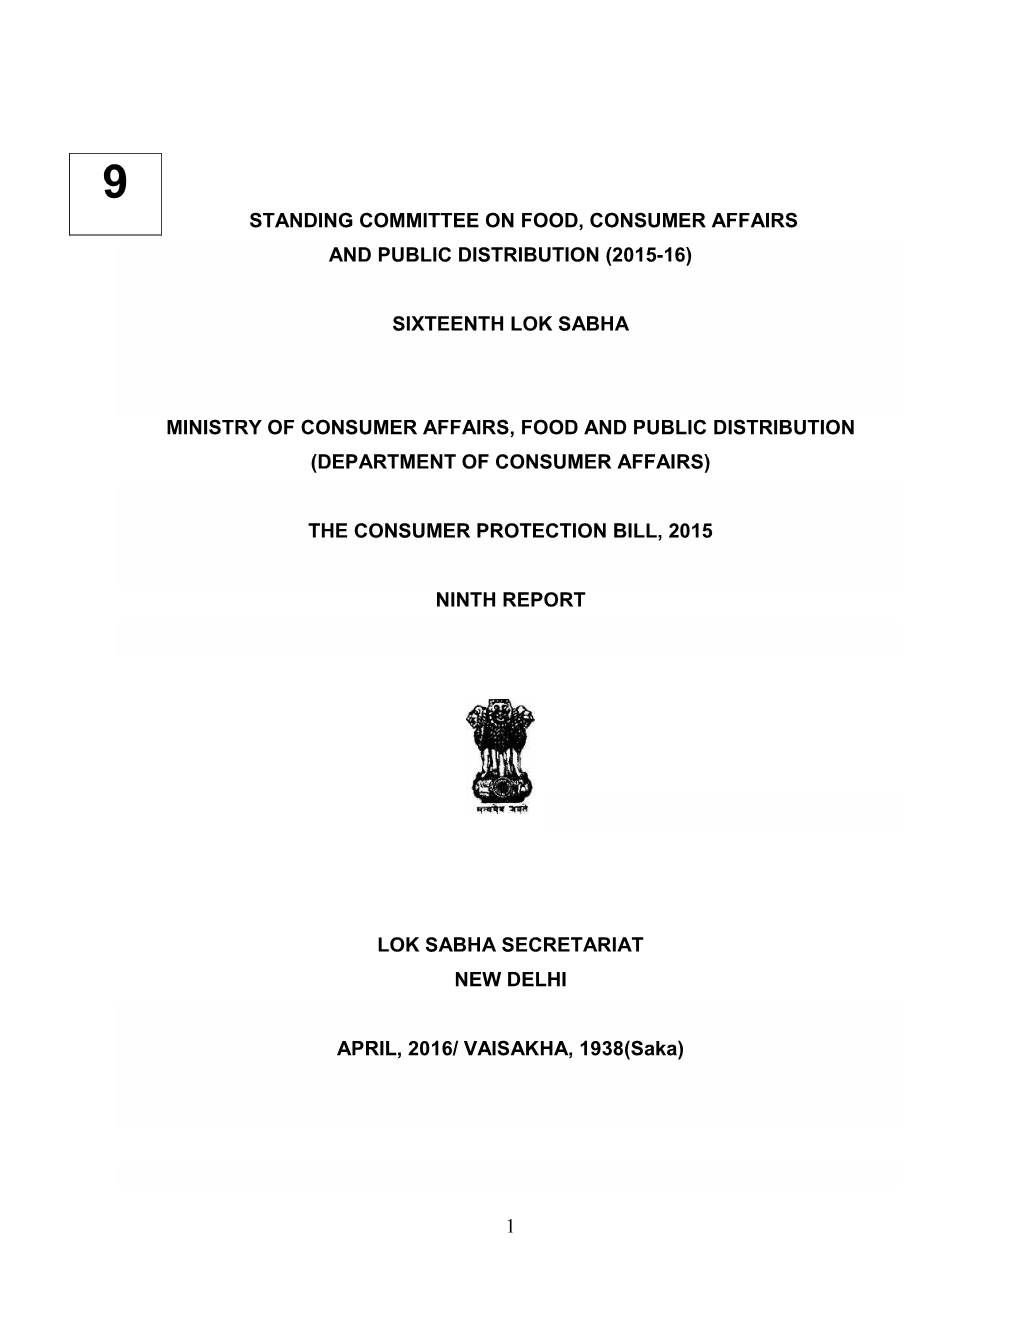 (2015-16) Sixteenth Lok Sabha Ministry of Consumer Affair